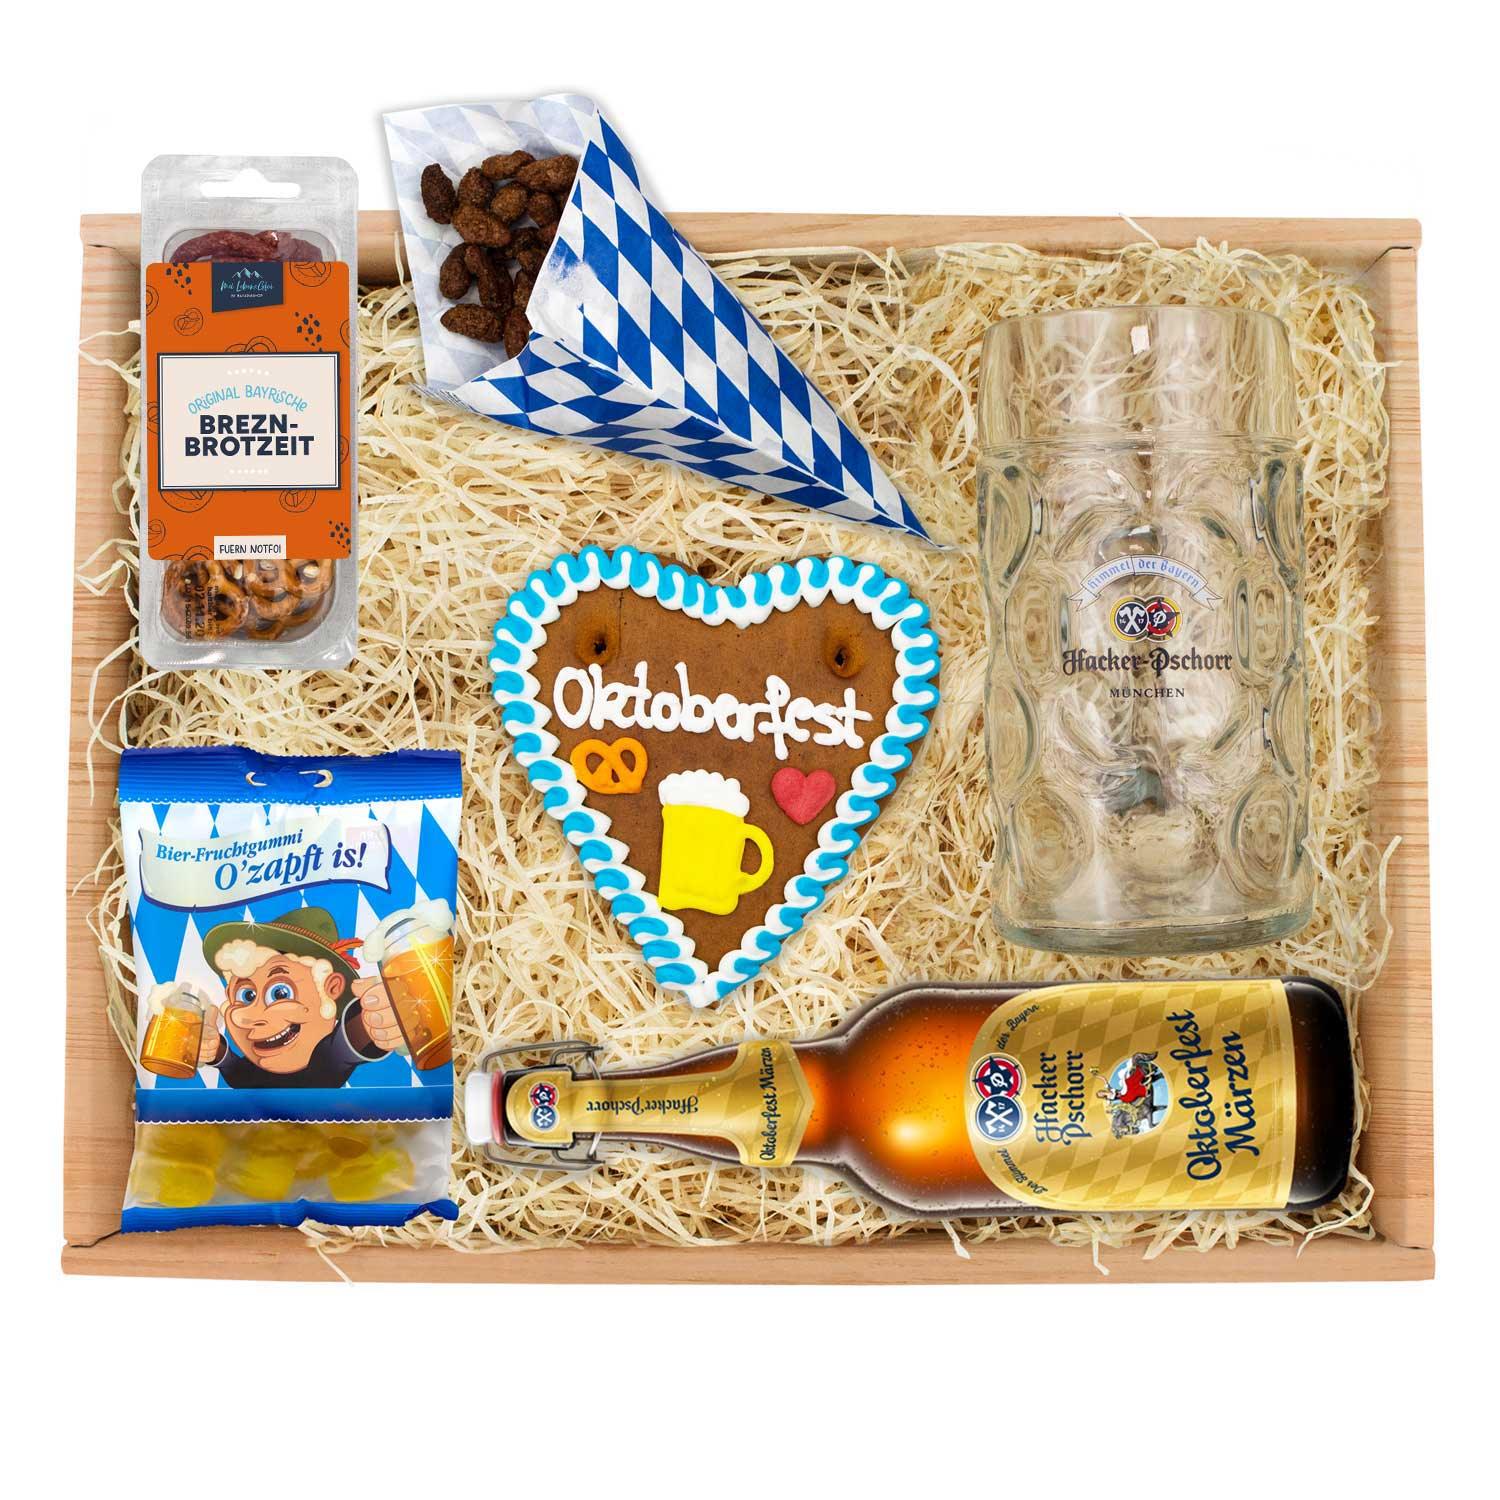 Oktoberfest-Box "Hacker Pschorr" - bavariashop - mei LebensGfui